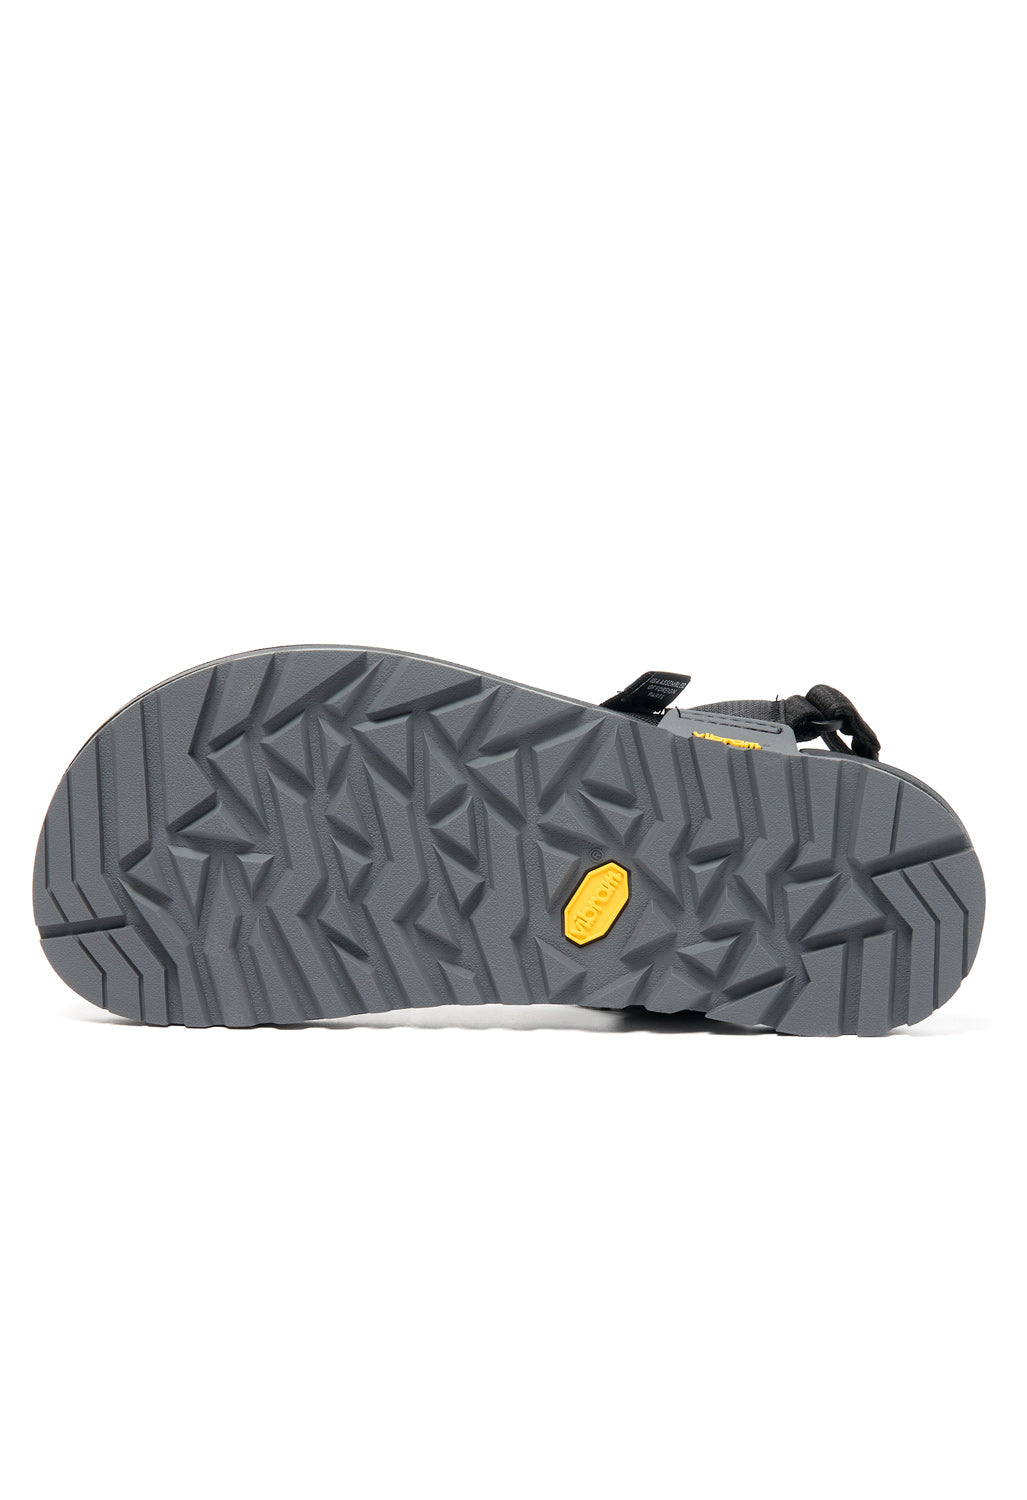 Bedrock Sandals Cairn Evo 3D Pro Sandals - Black